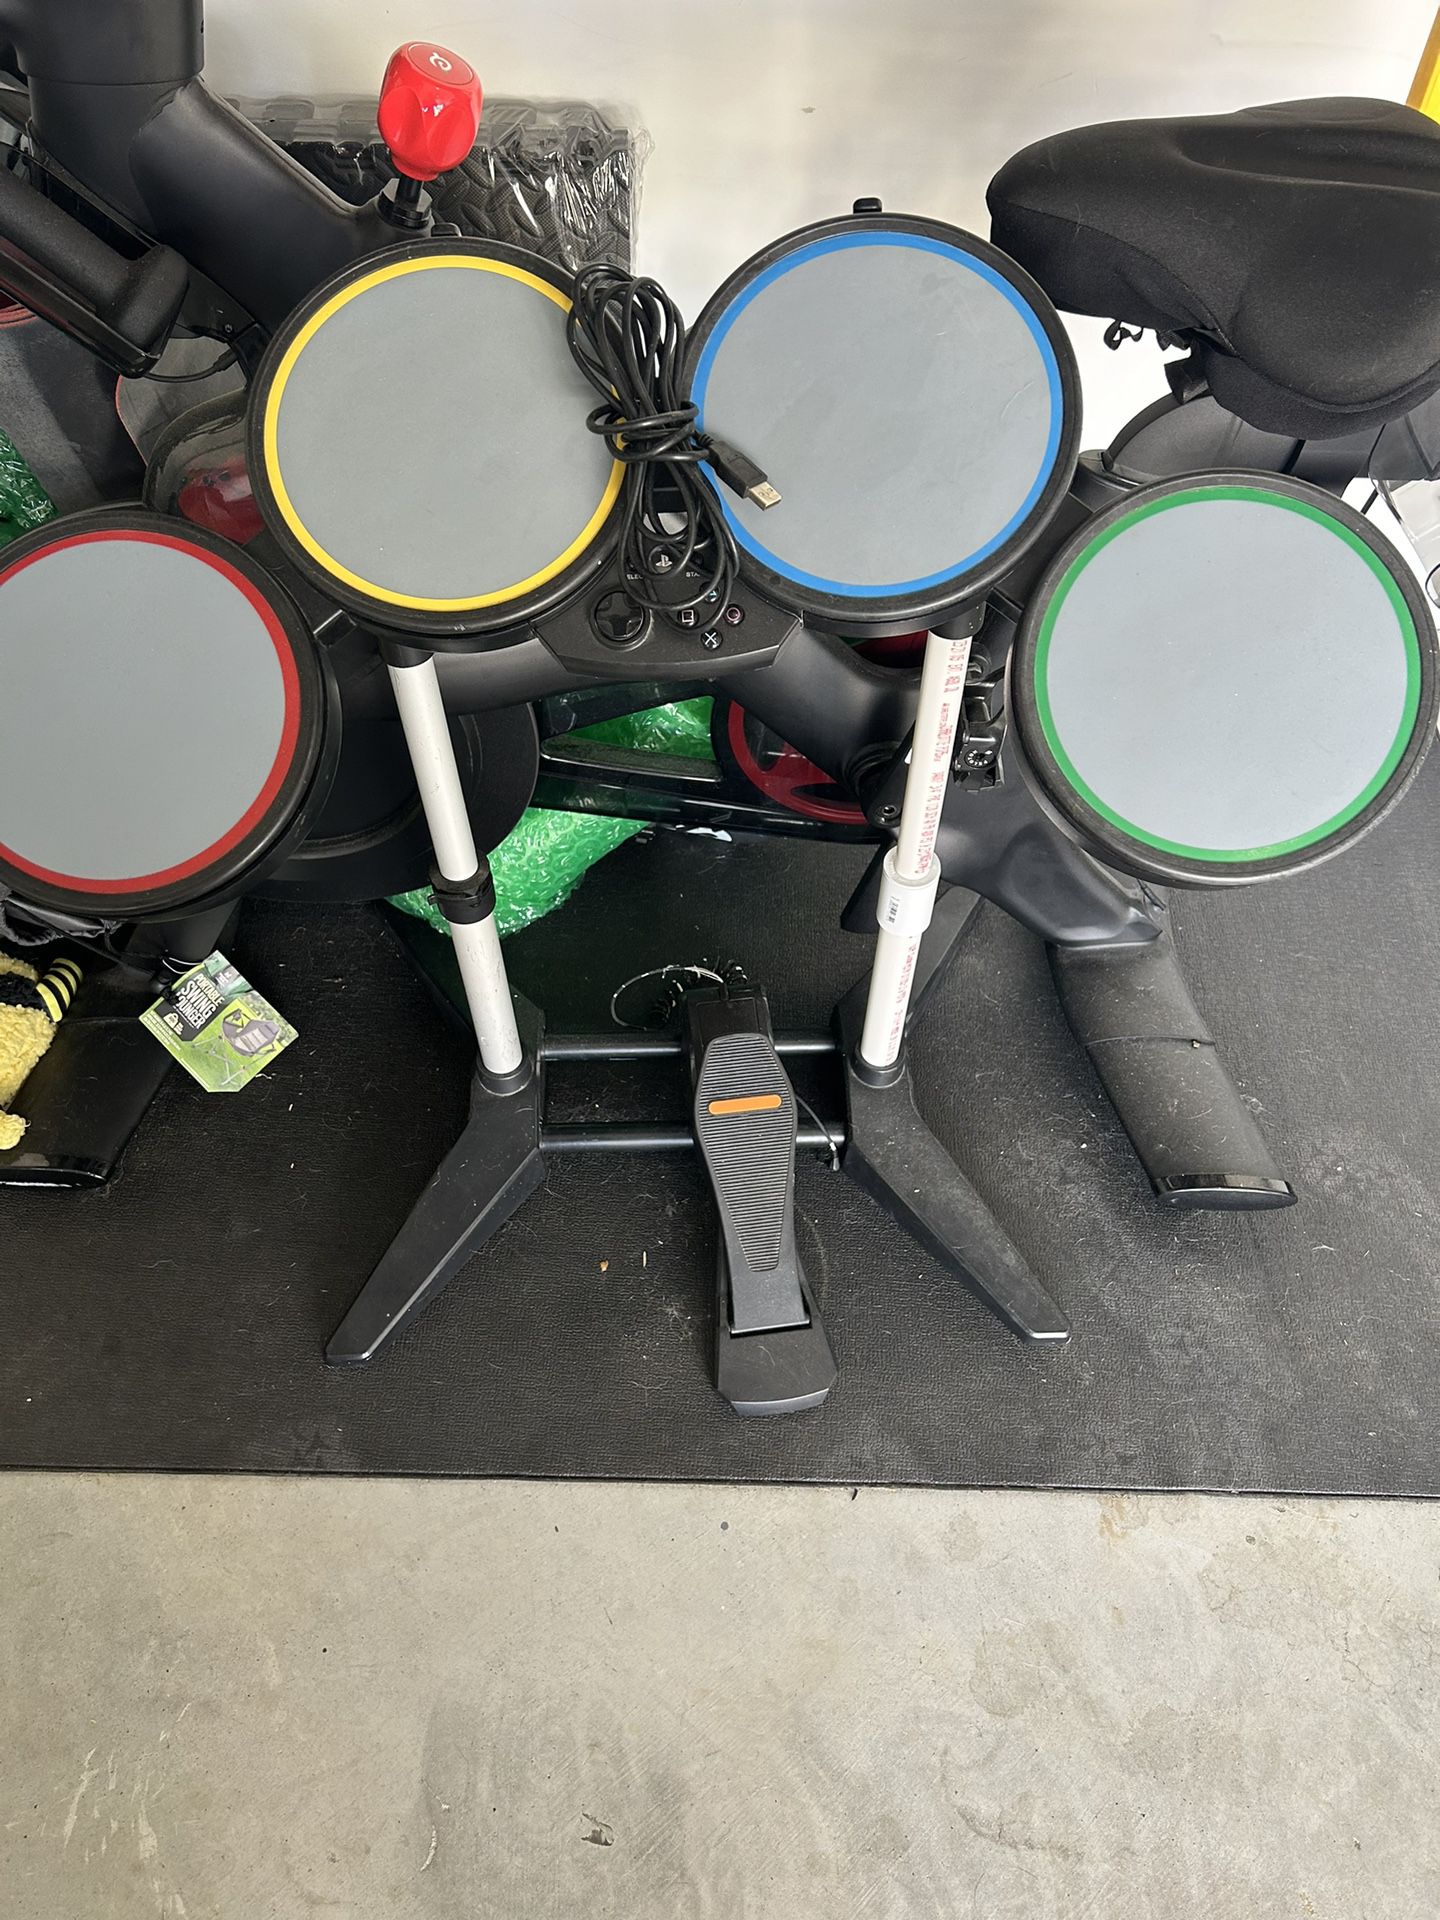 Rock band Drum Set- PS2, PS3